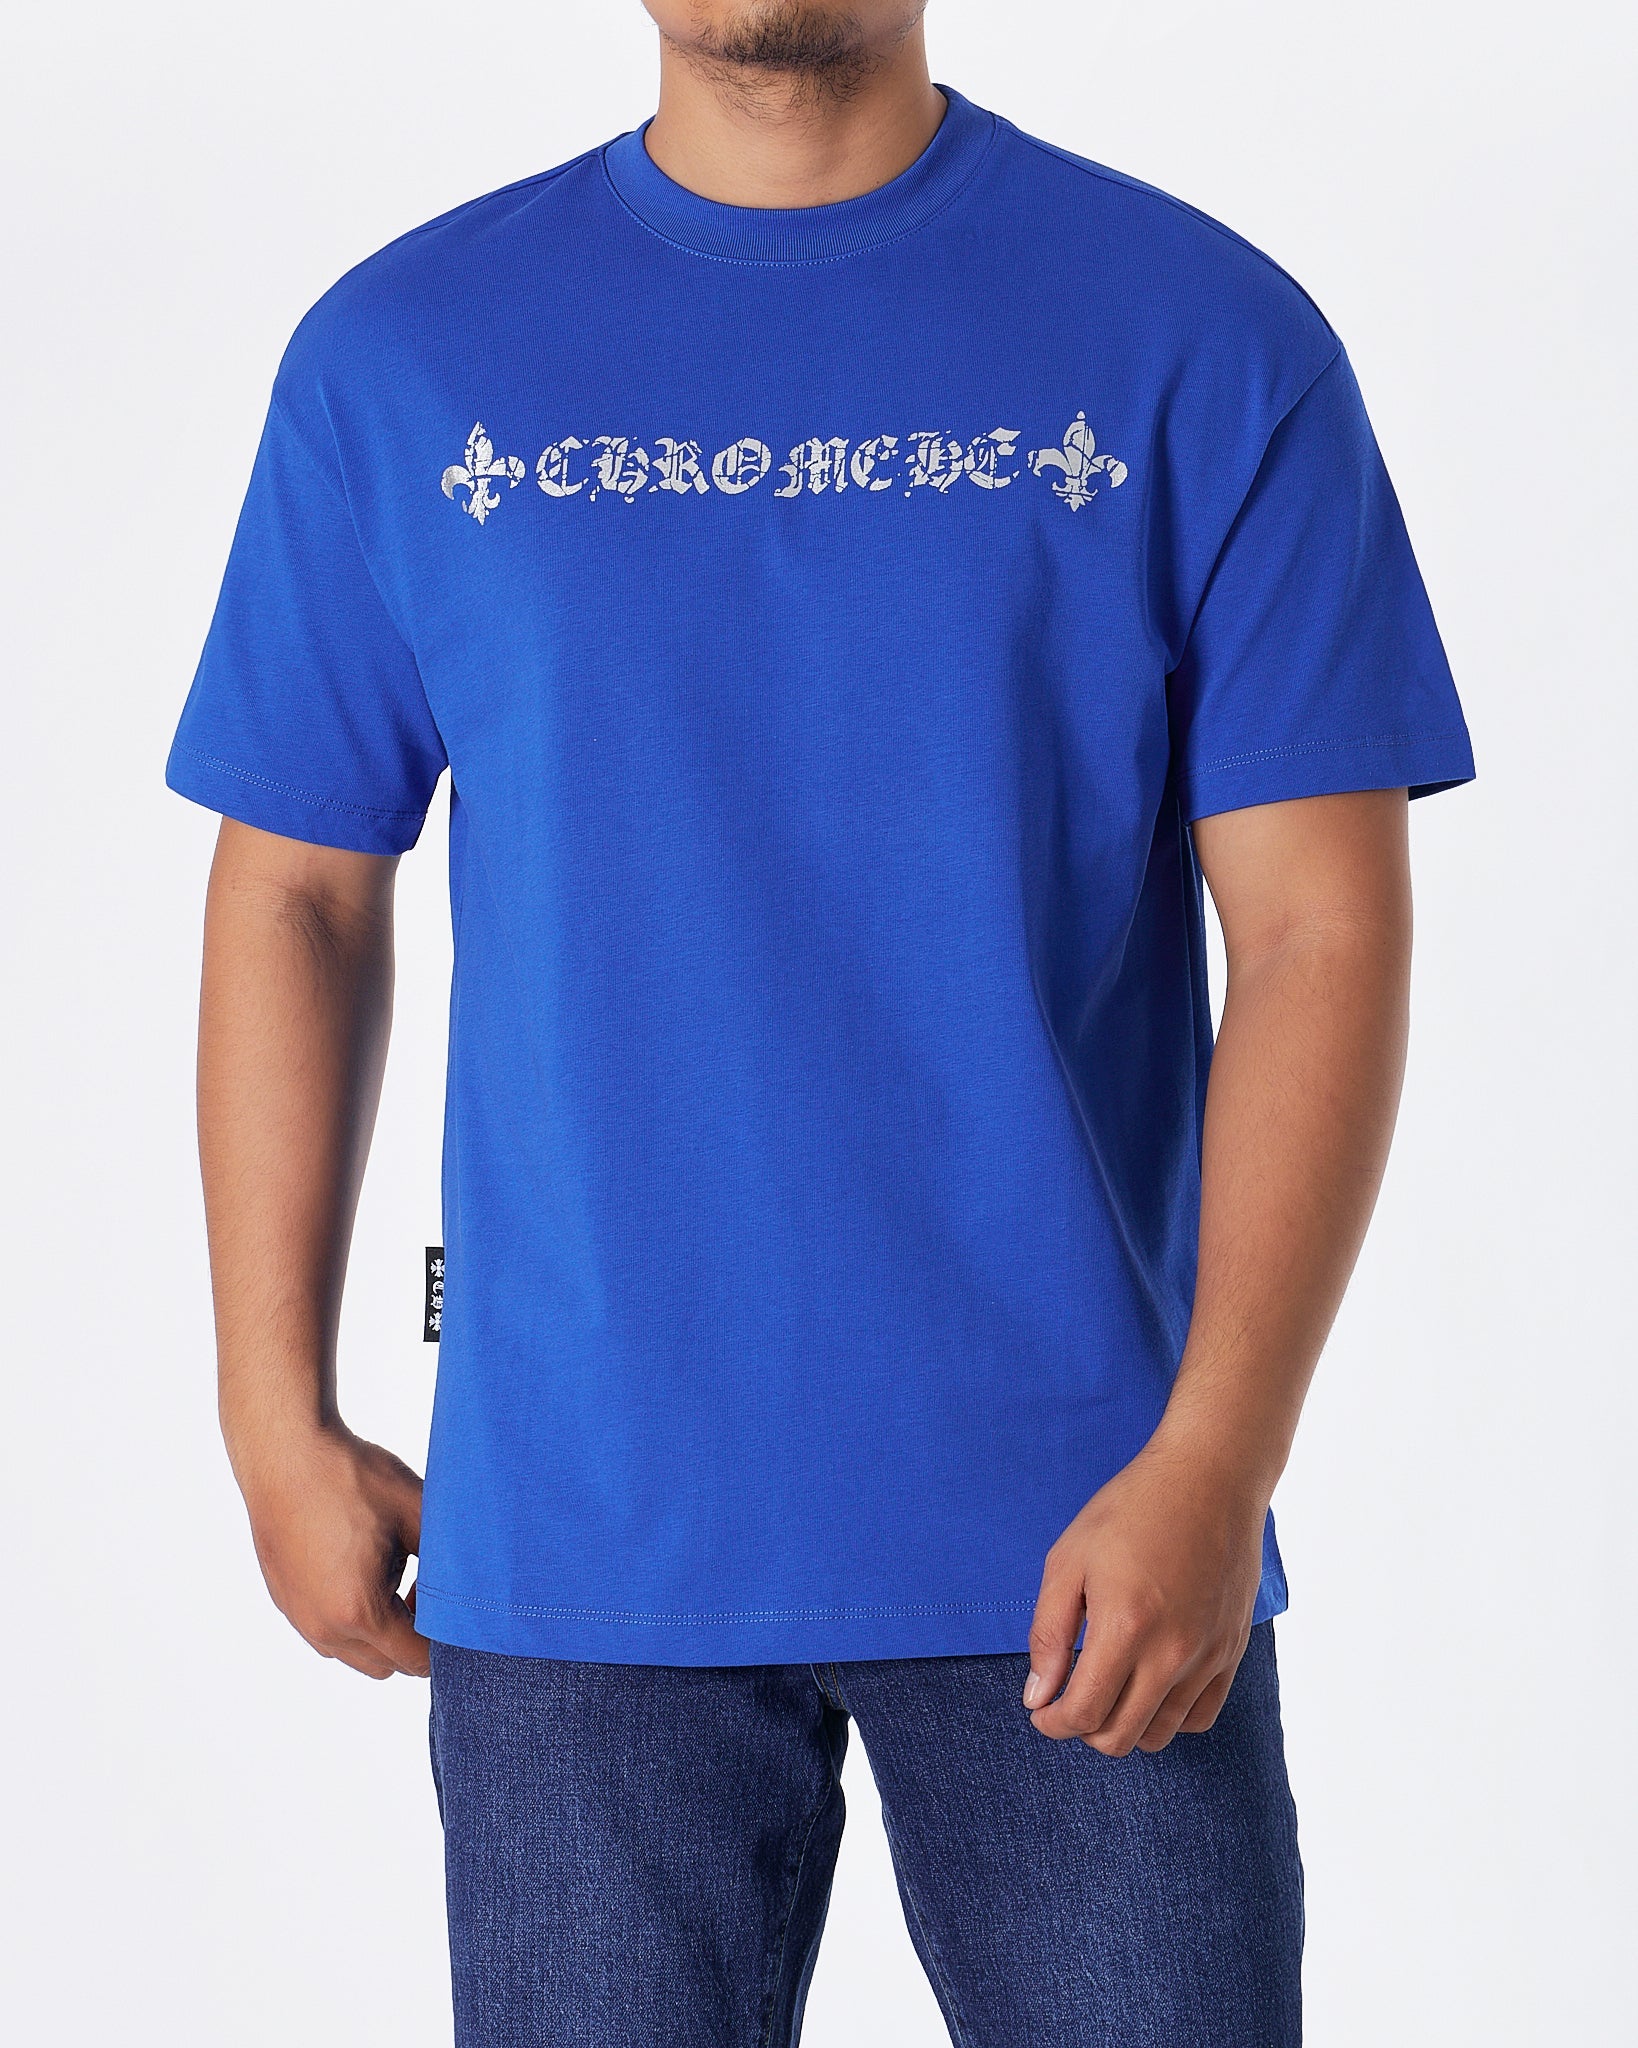 MOI OUTFIT-CH Men Blue T-Shirt 54.90